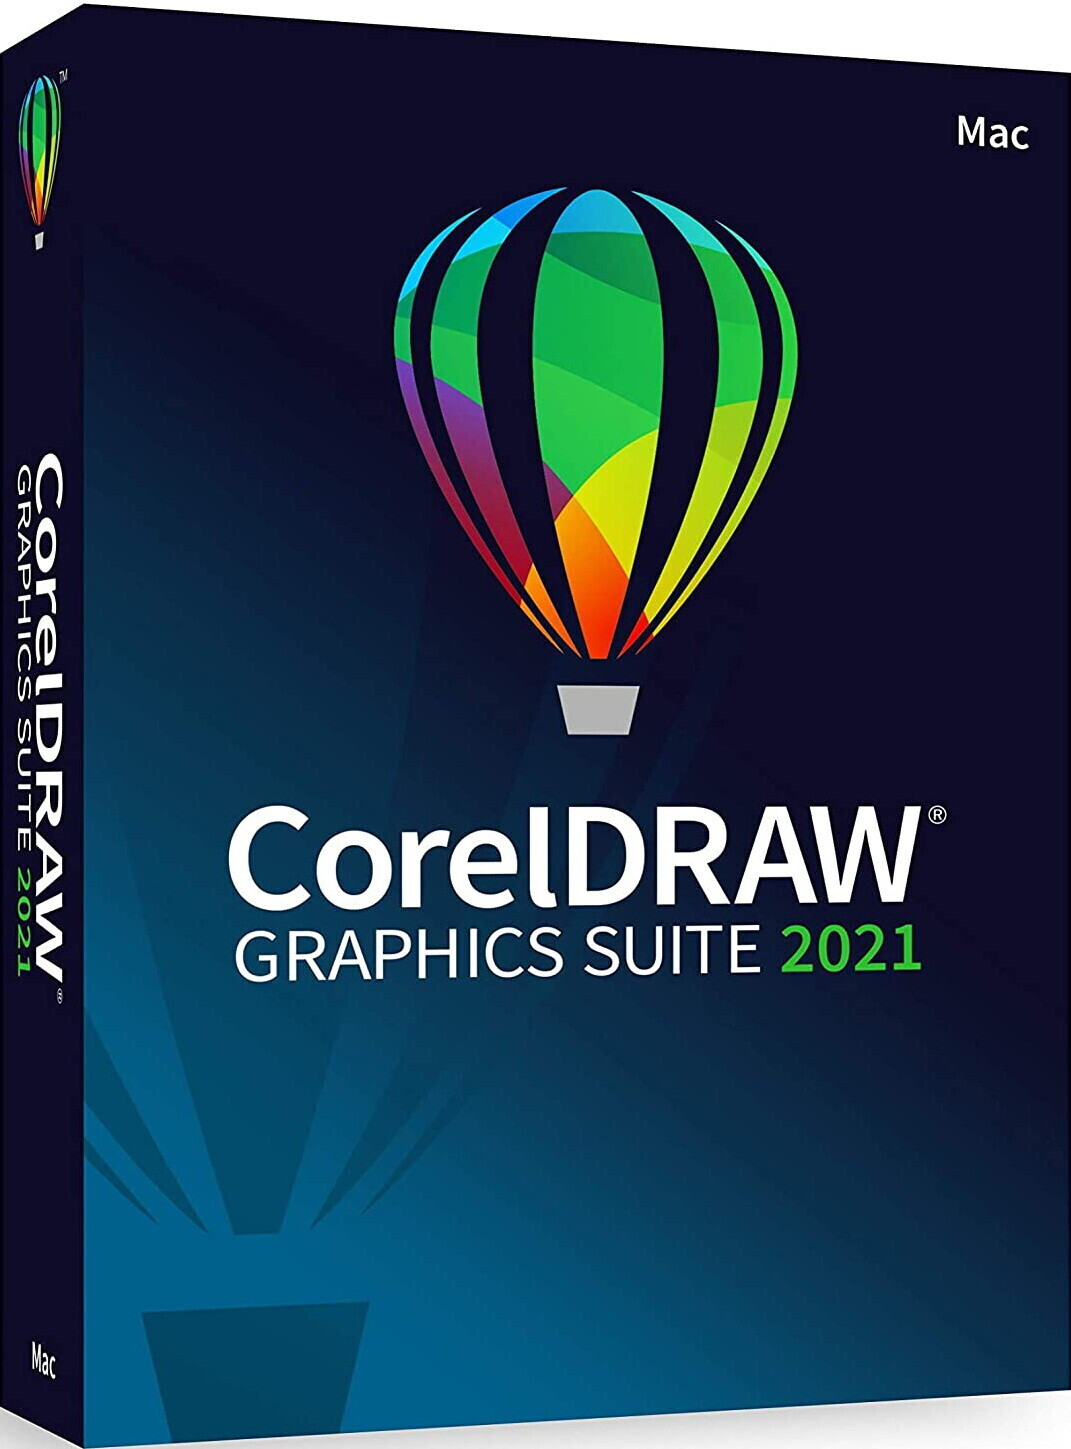 coreldraw 2021 for mac